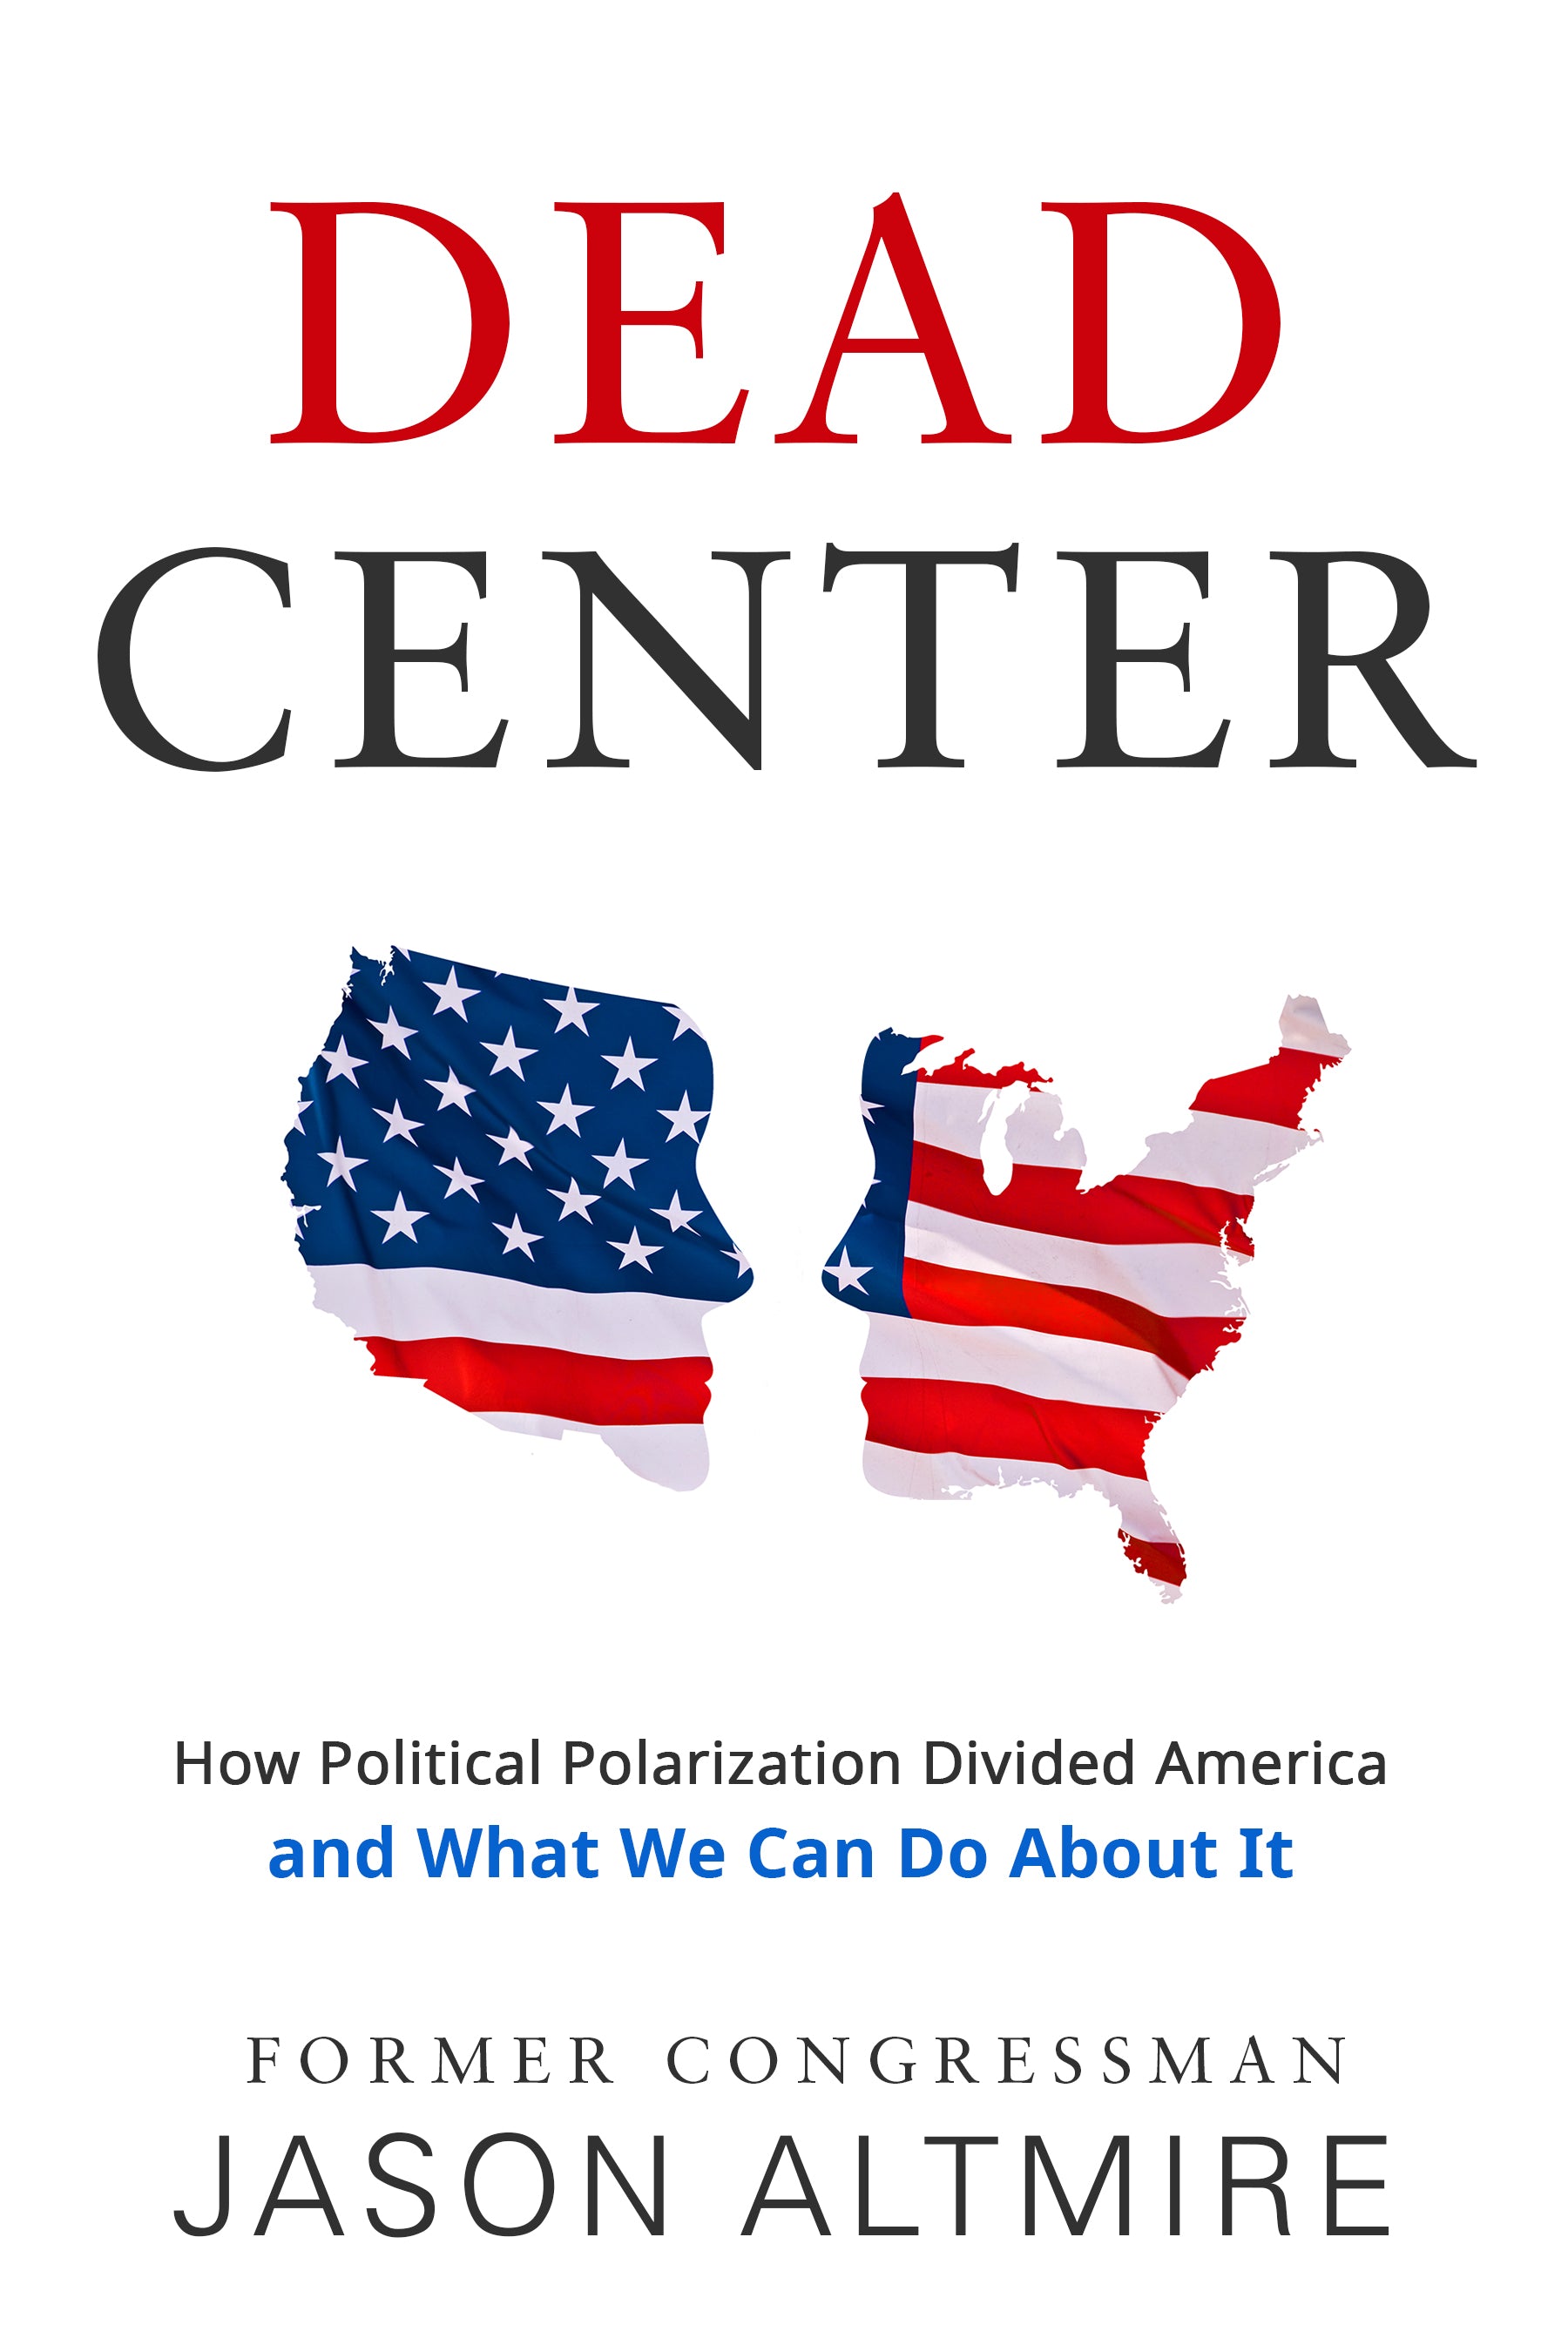 Former Congressman Jason Altmire’s “Dead Center” “fourpeats” as the Sunbury Press bestseller for November